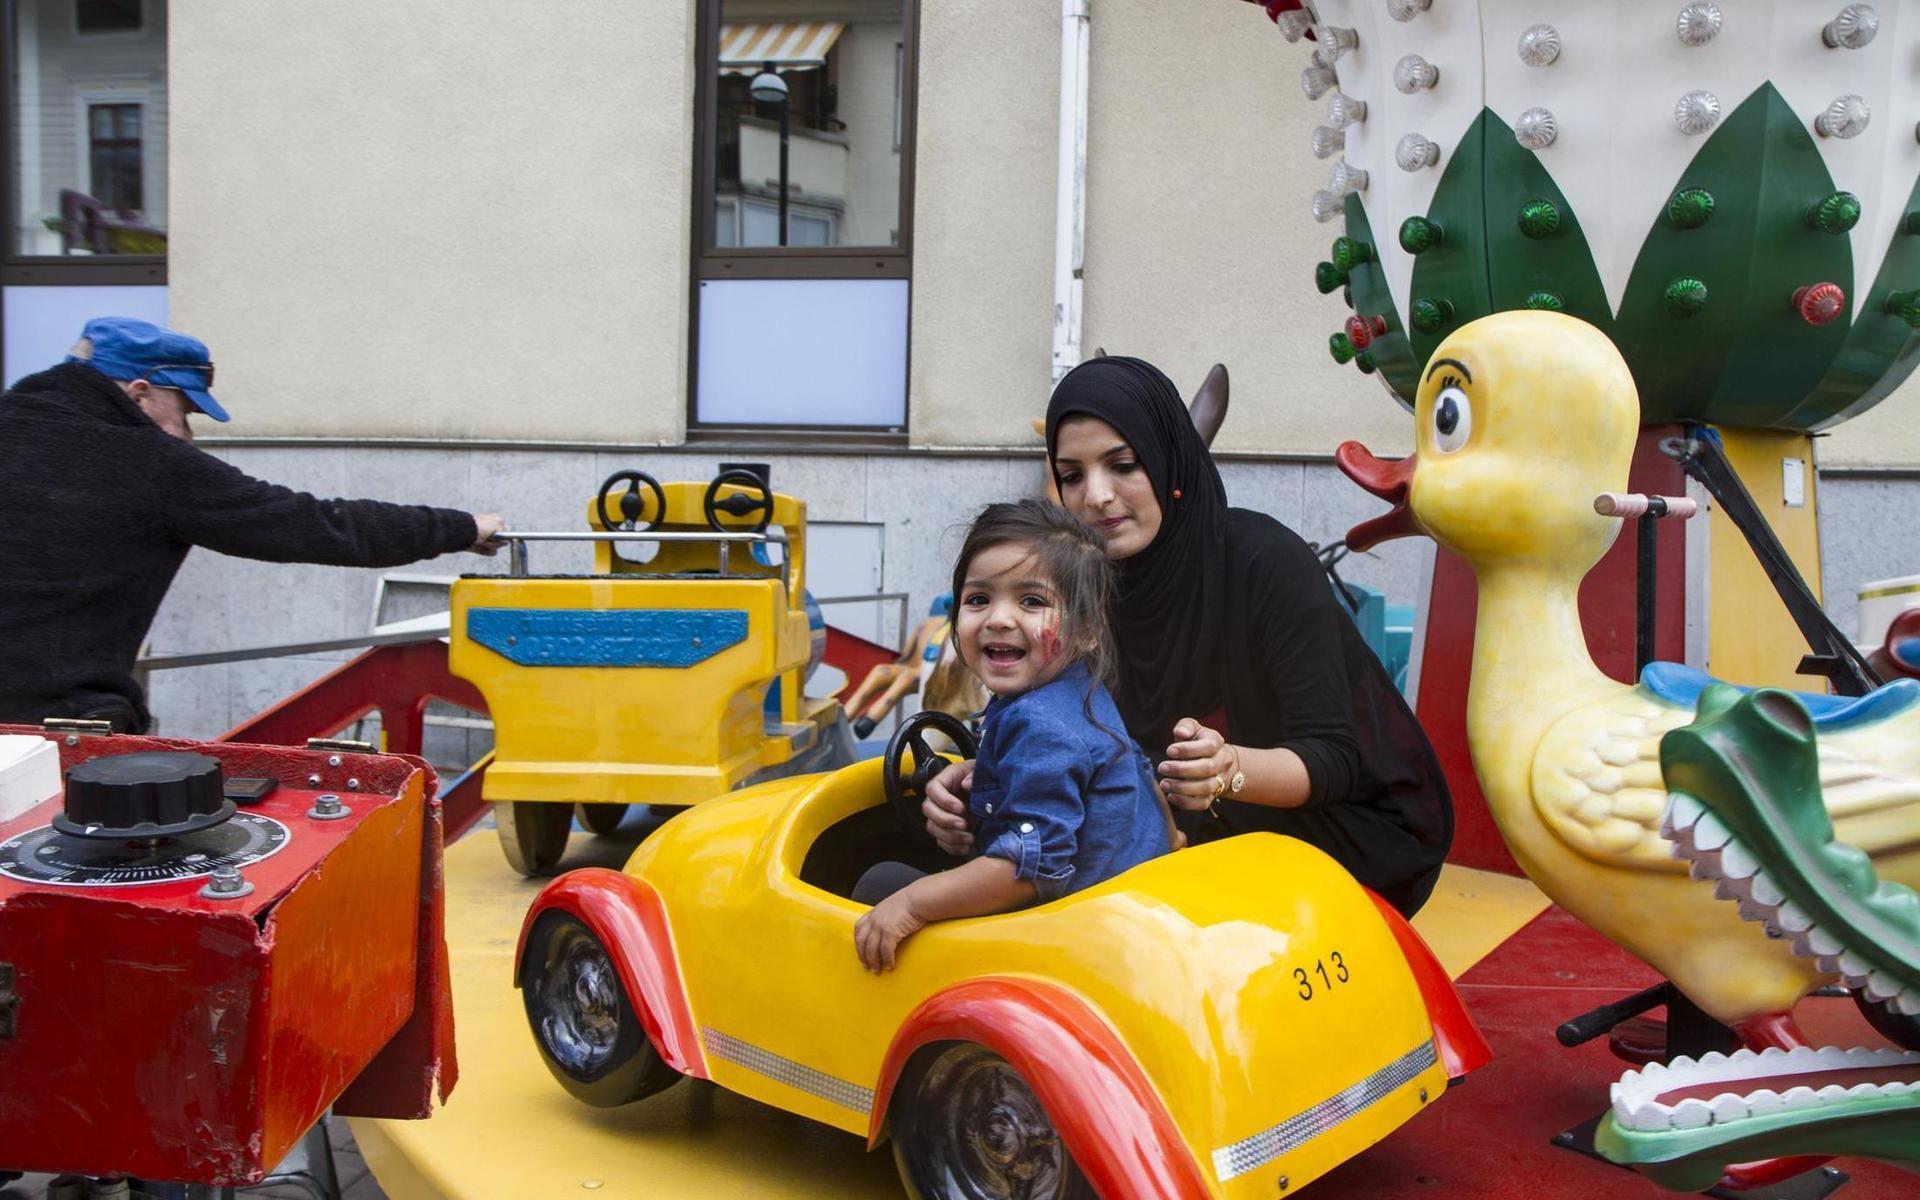 Mashaal Hirani tog en tur i karusellen med mamma Madeeha Merchant. Bild: Hanna Dahlström